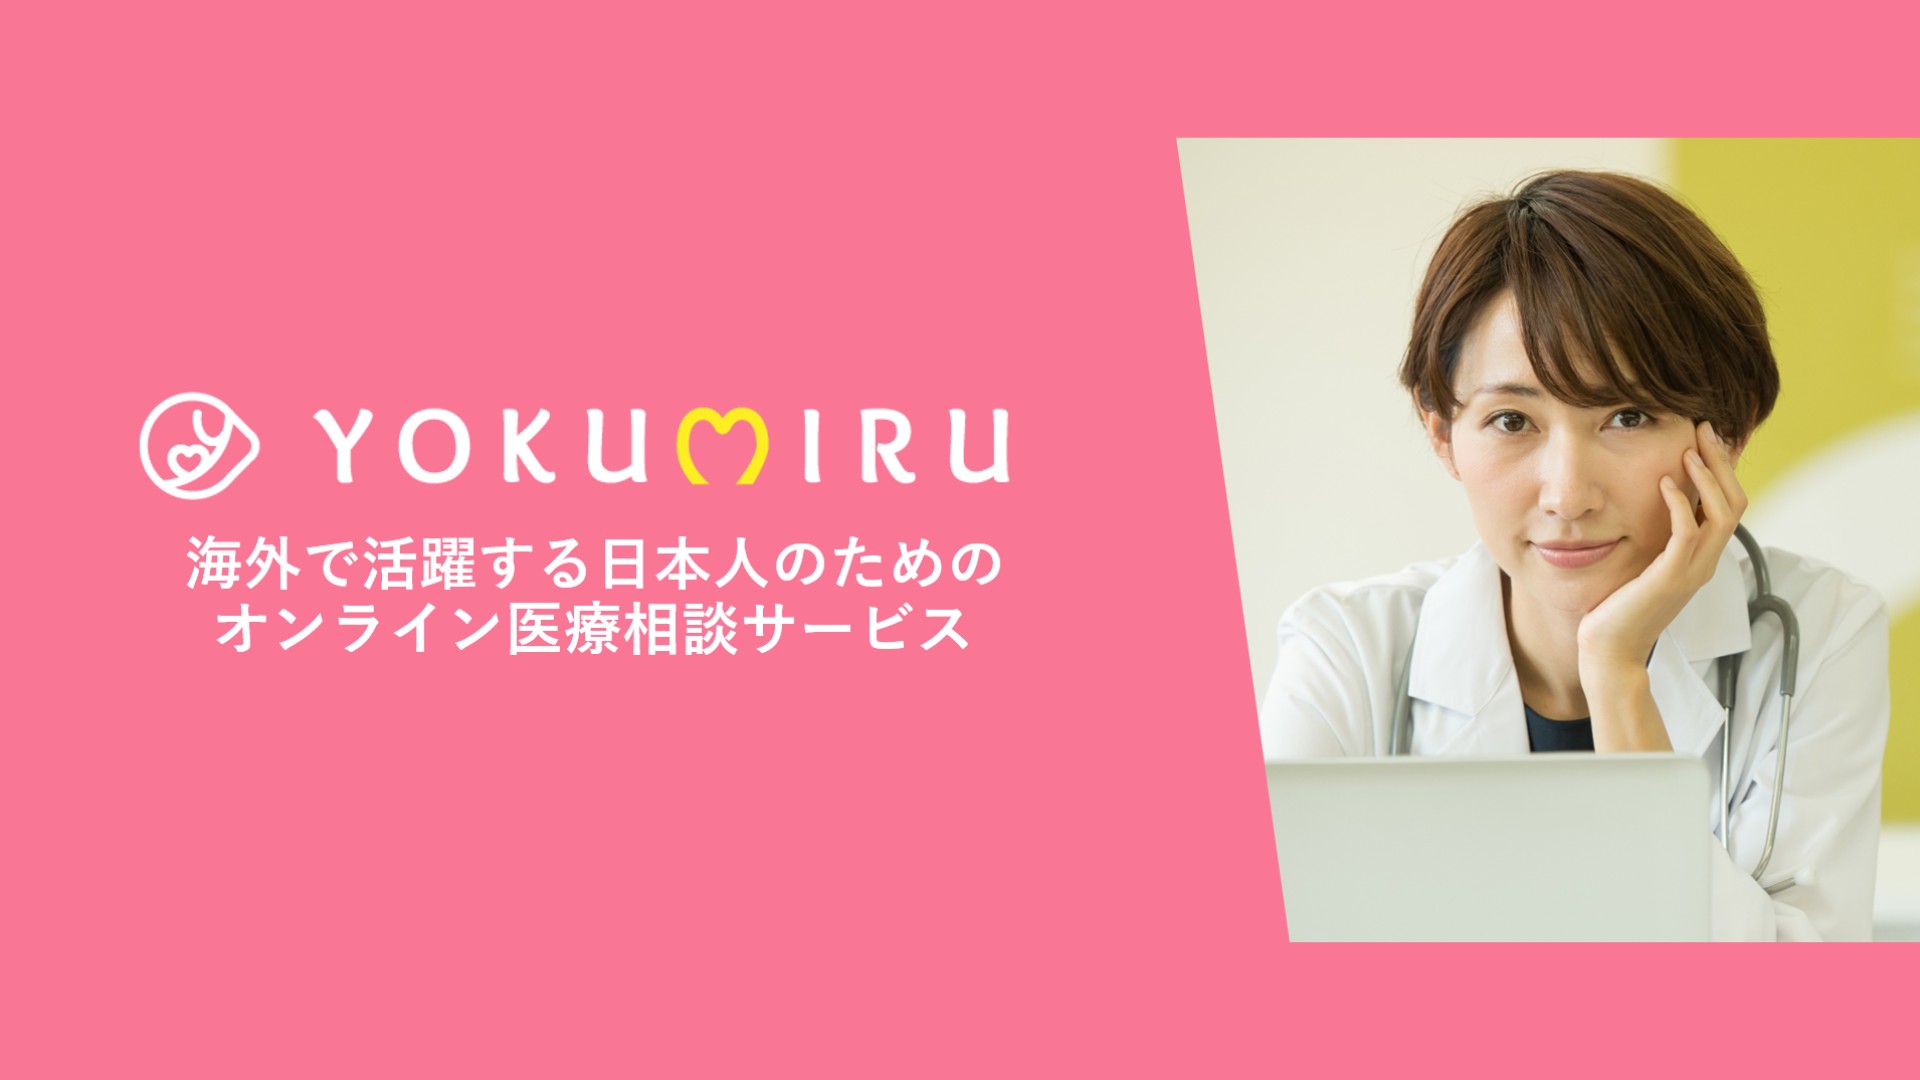 YOKUMIRU株式会社と提携を開始いたしました